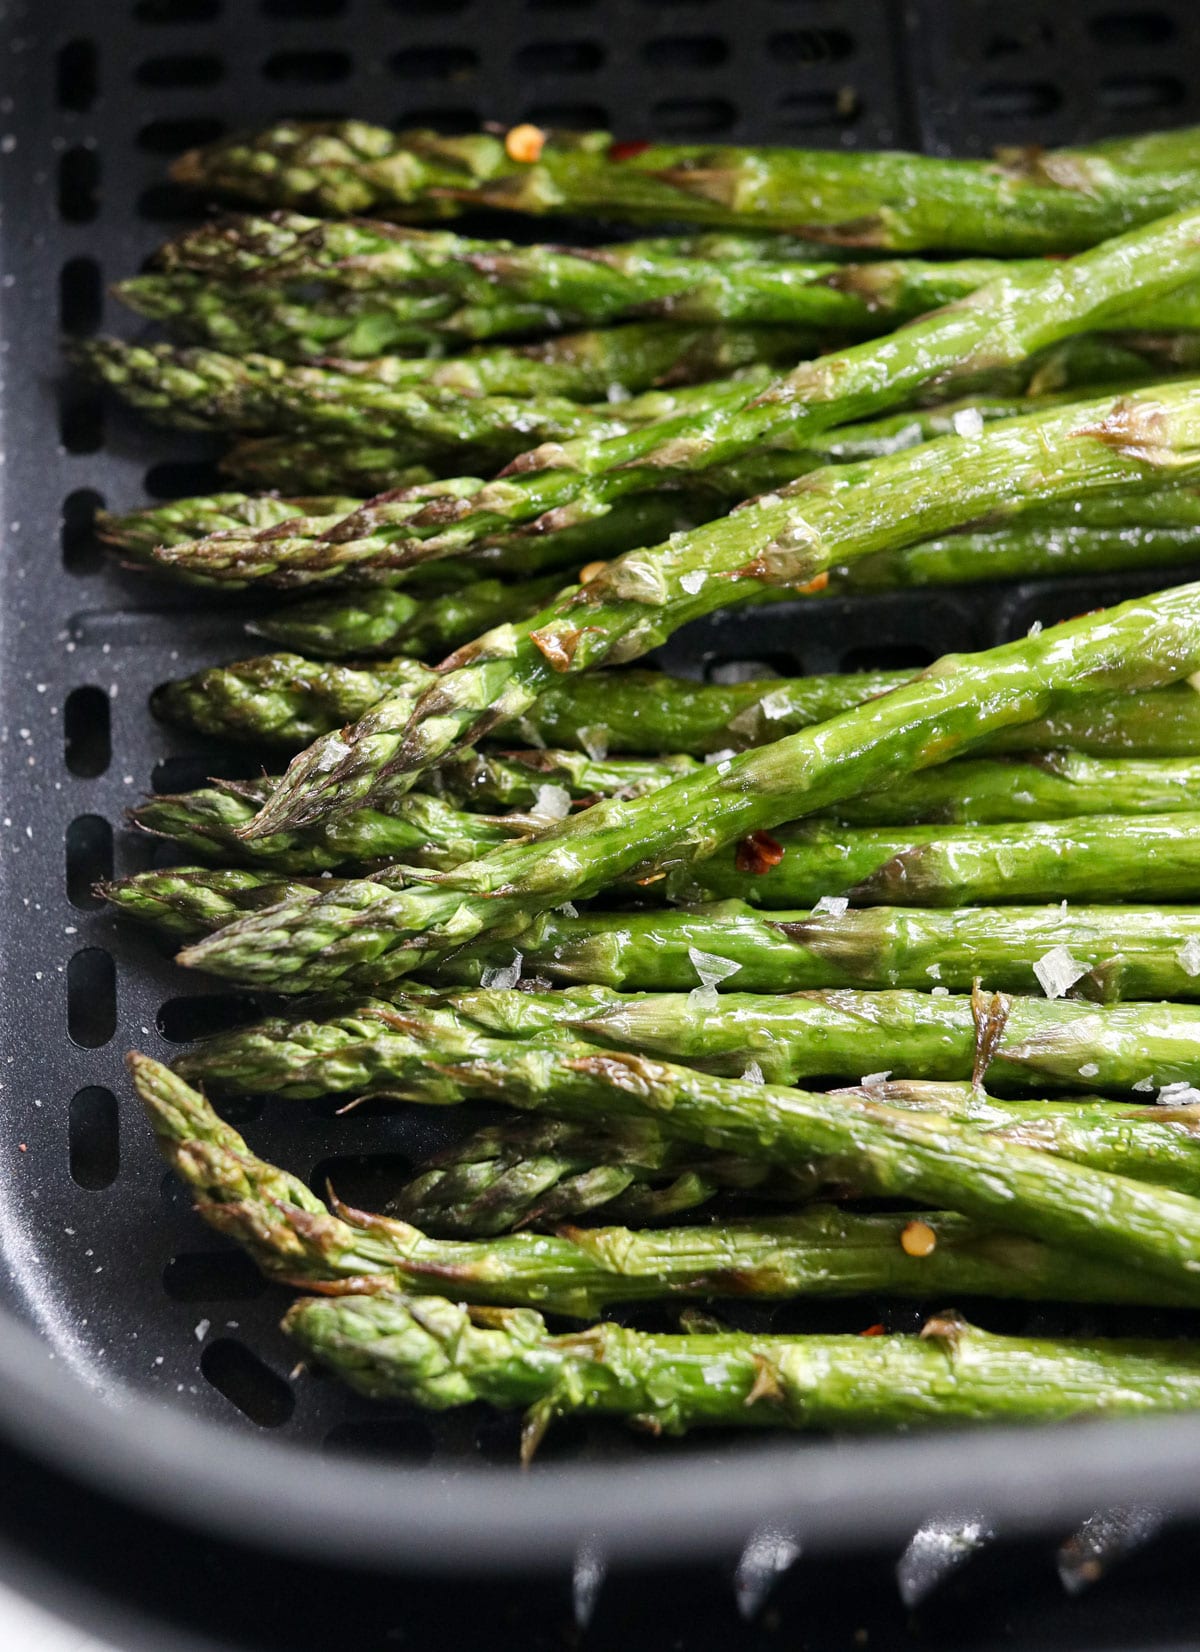 asparagus piled in air fryer basket.